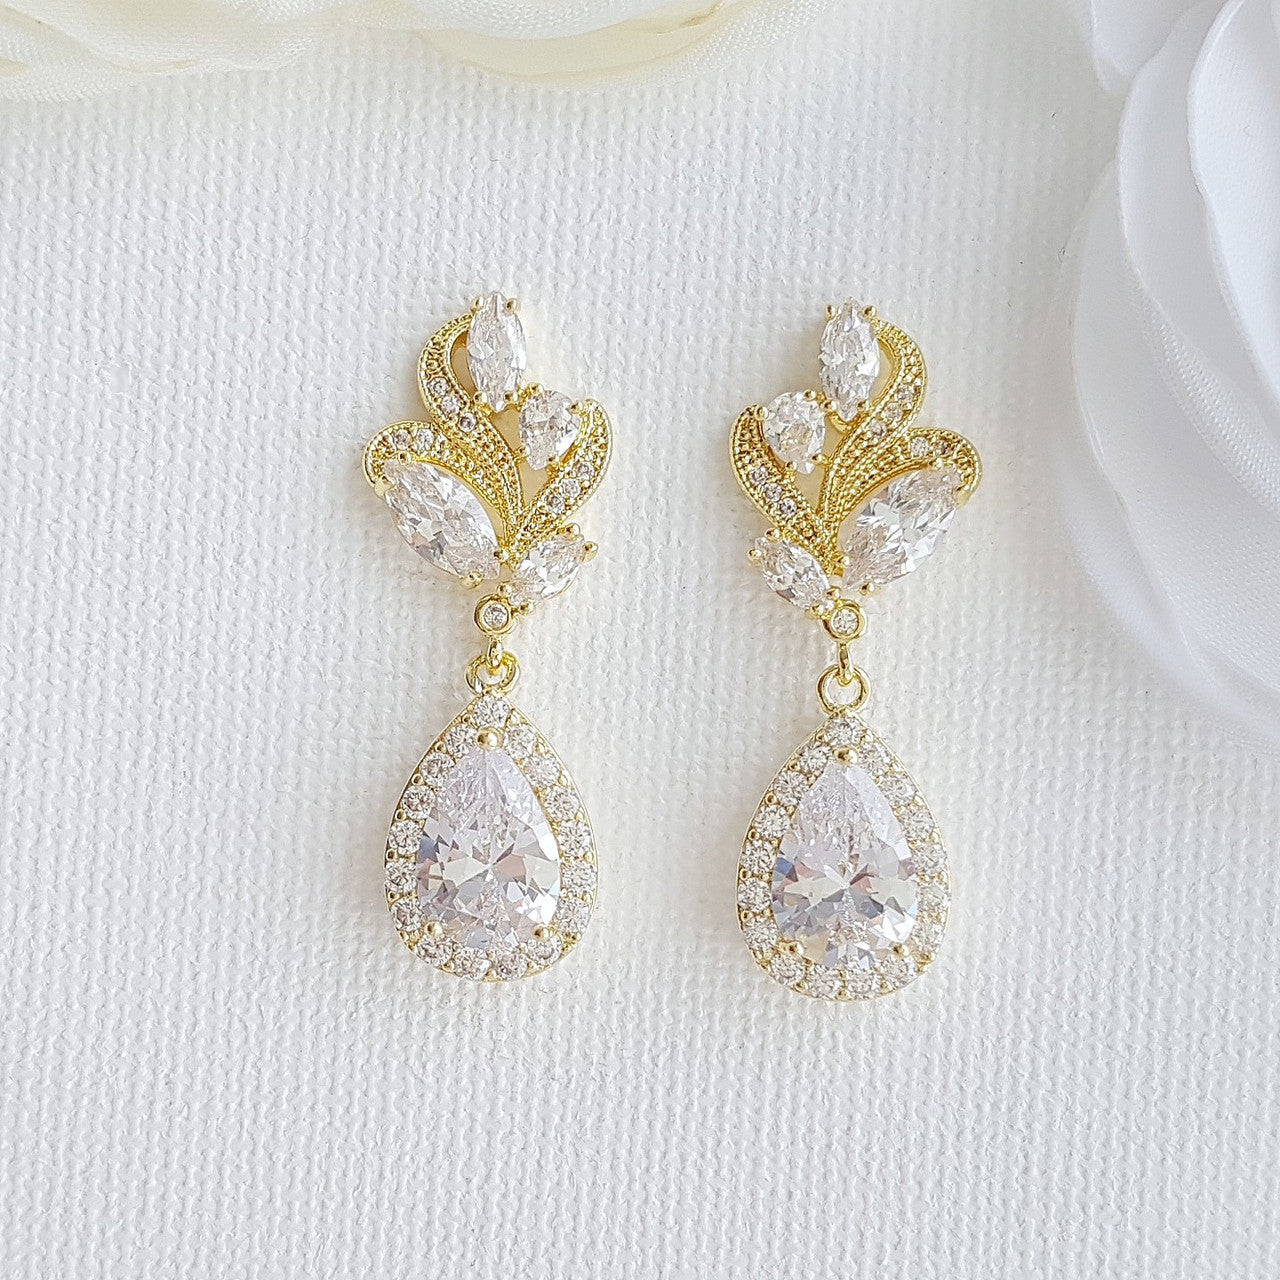 Clear Crystal Drop Earrings for Wedding Silver-Wavy